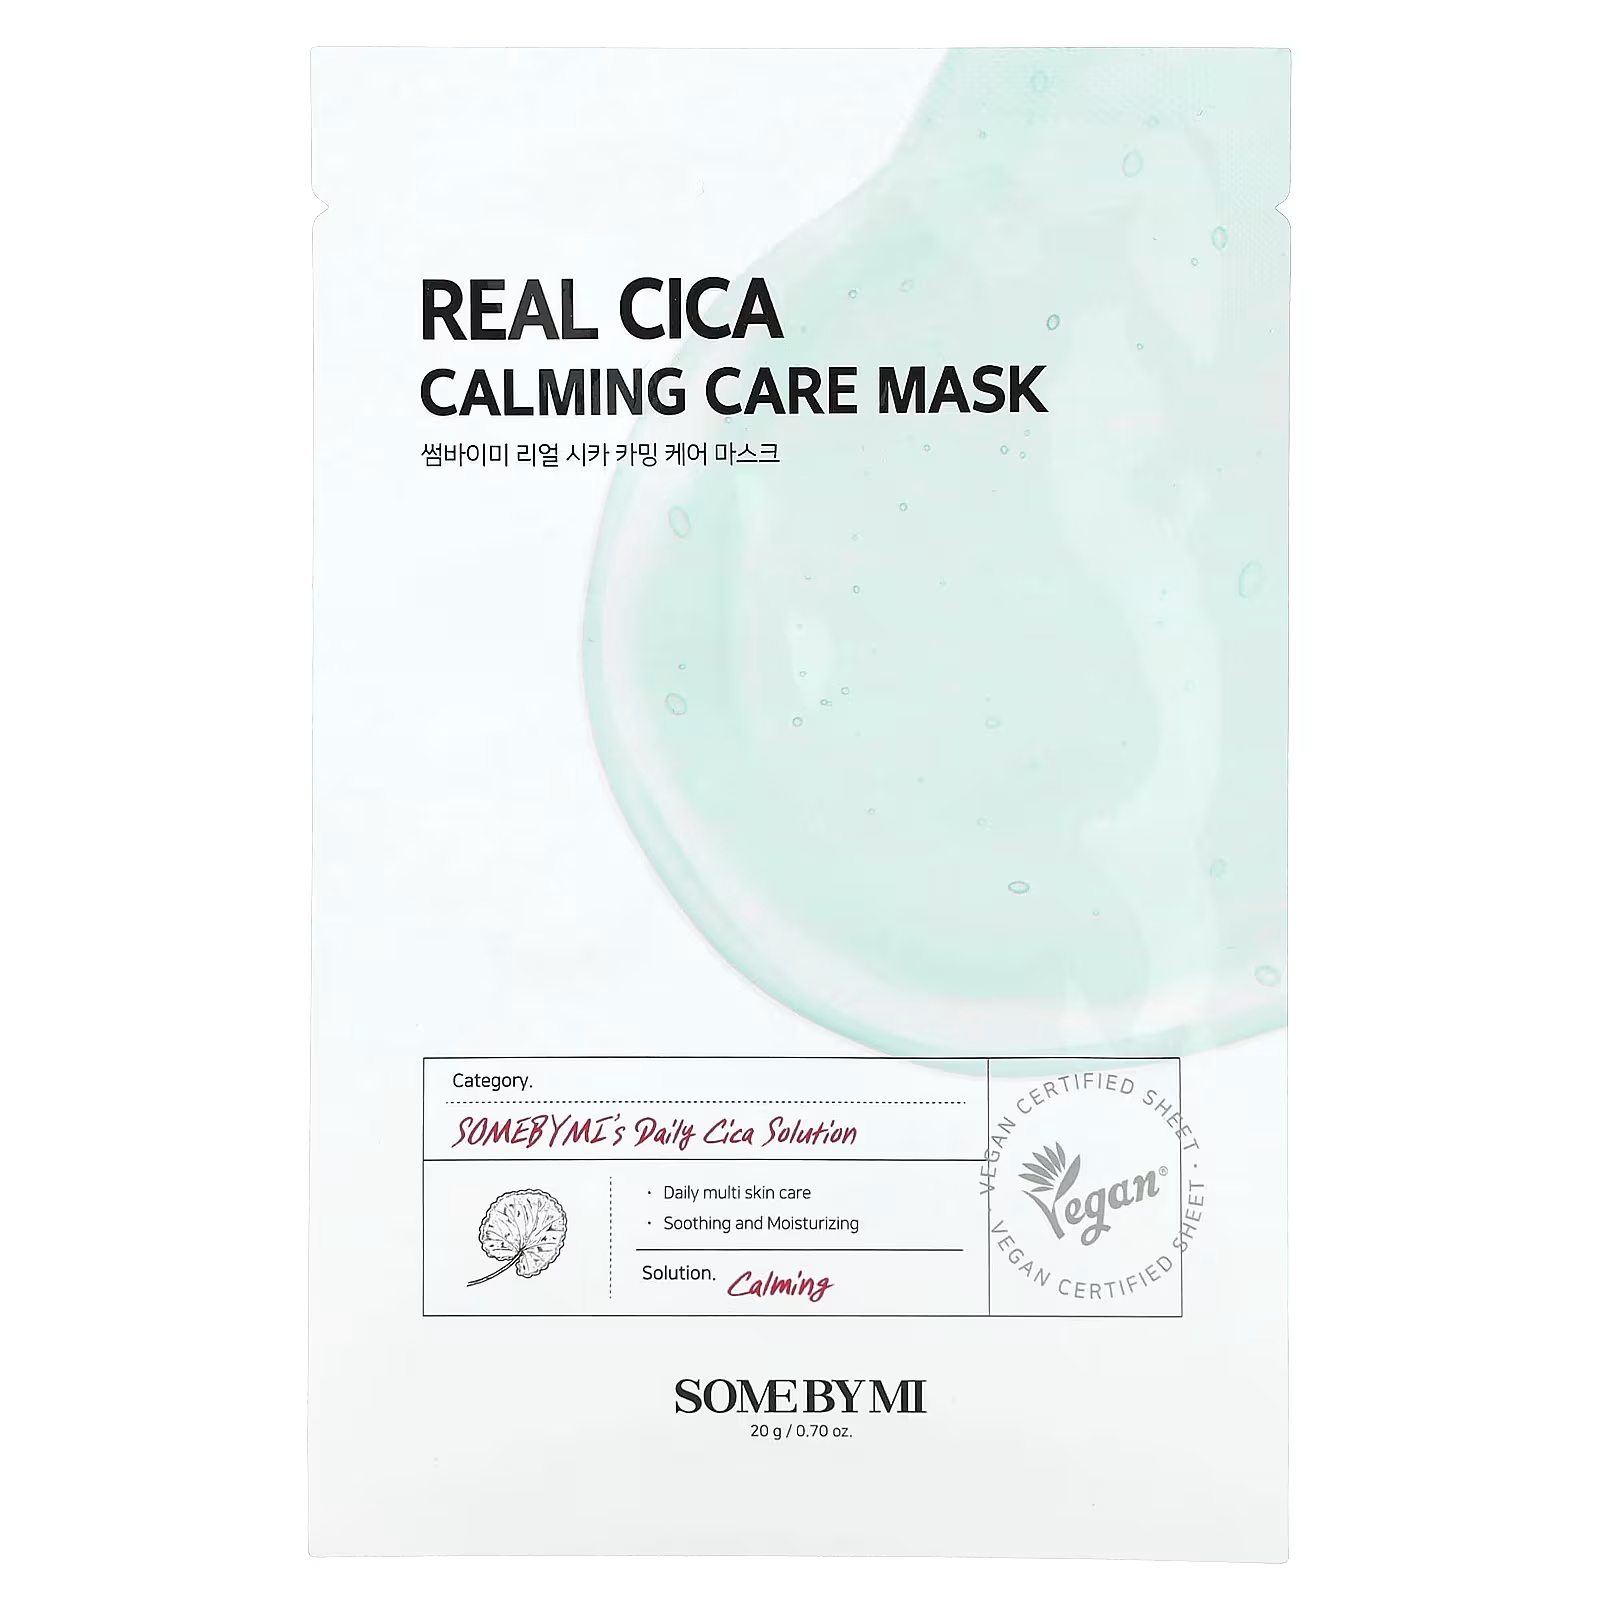 

SOME BY MI Real Cica Calming Care Beauty Mask, 1 лист, 0,70 унции (20 г)